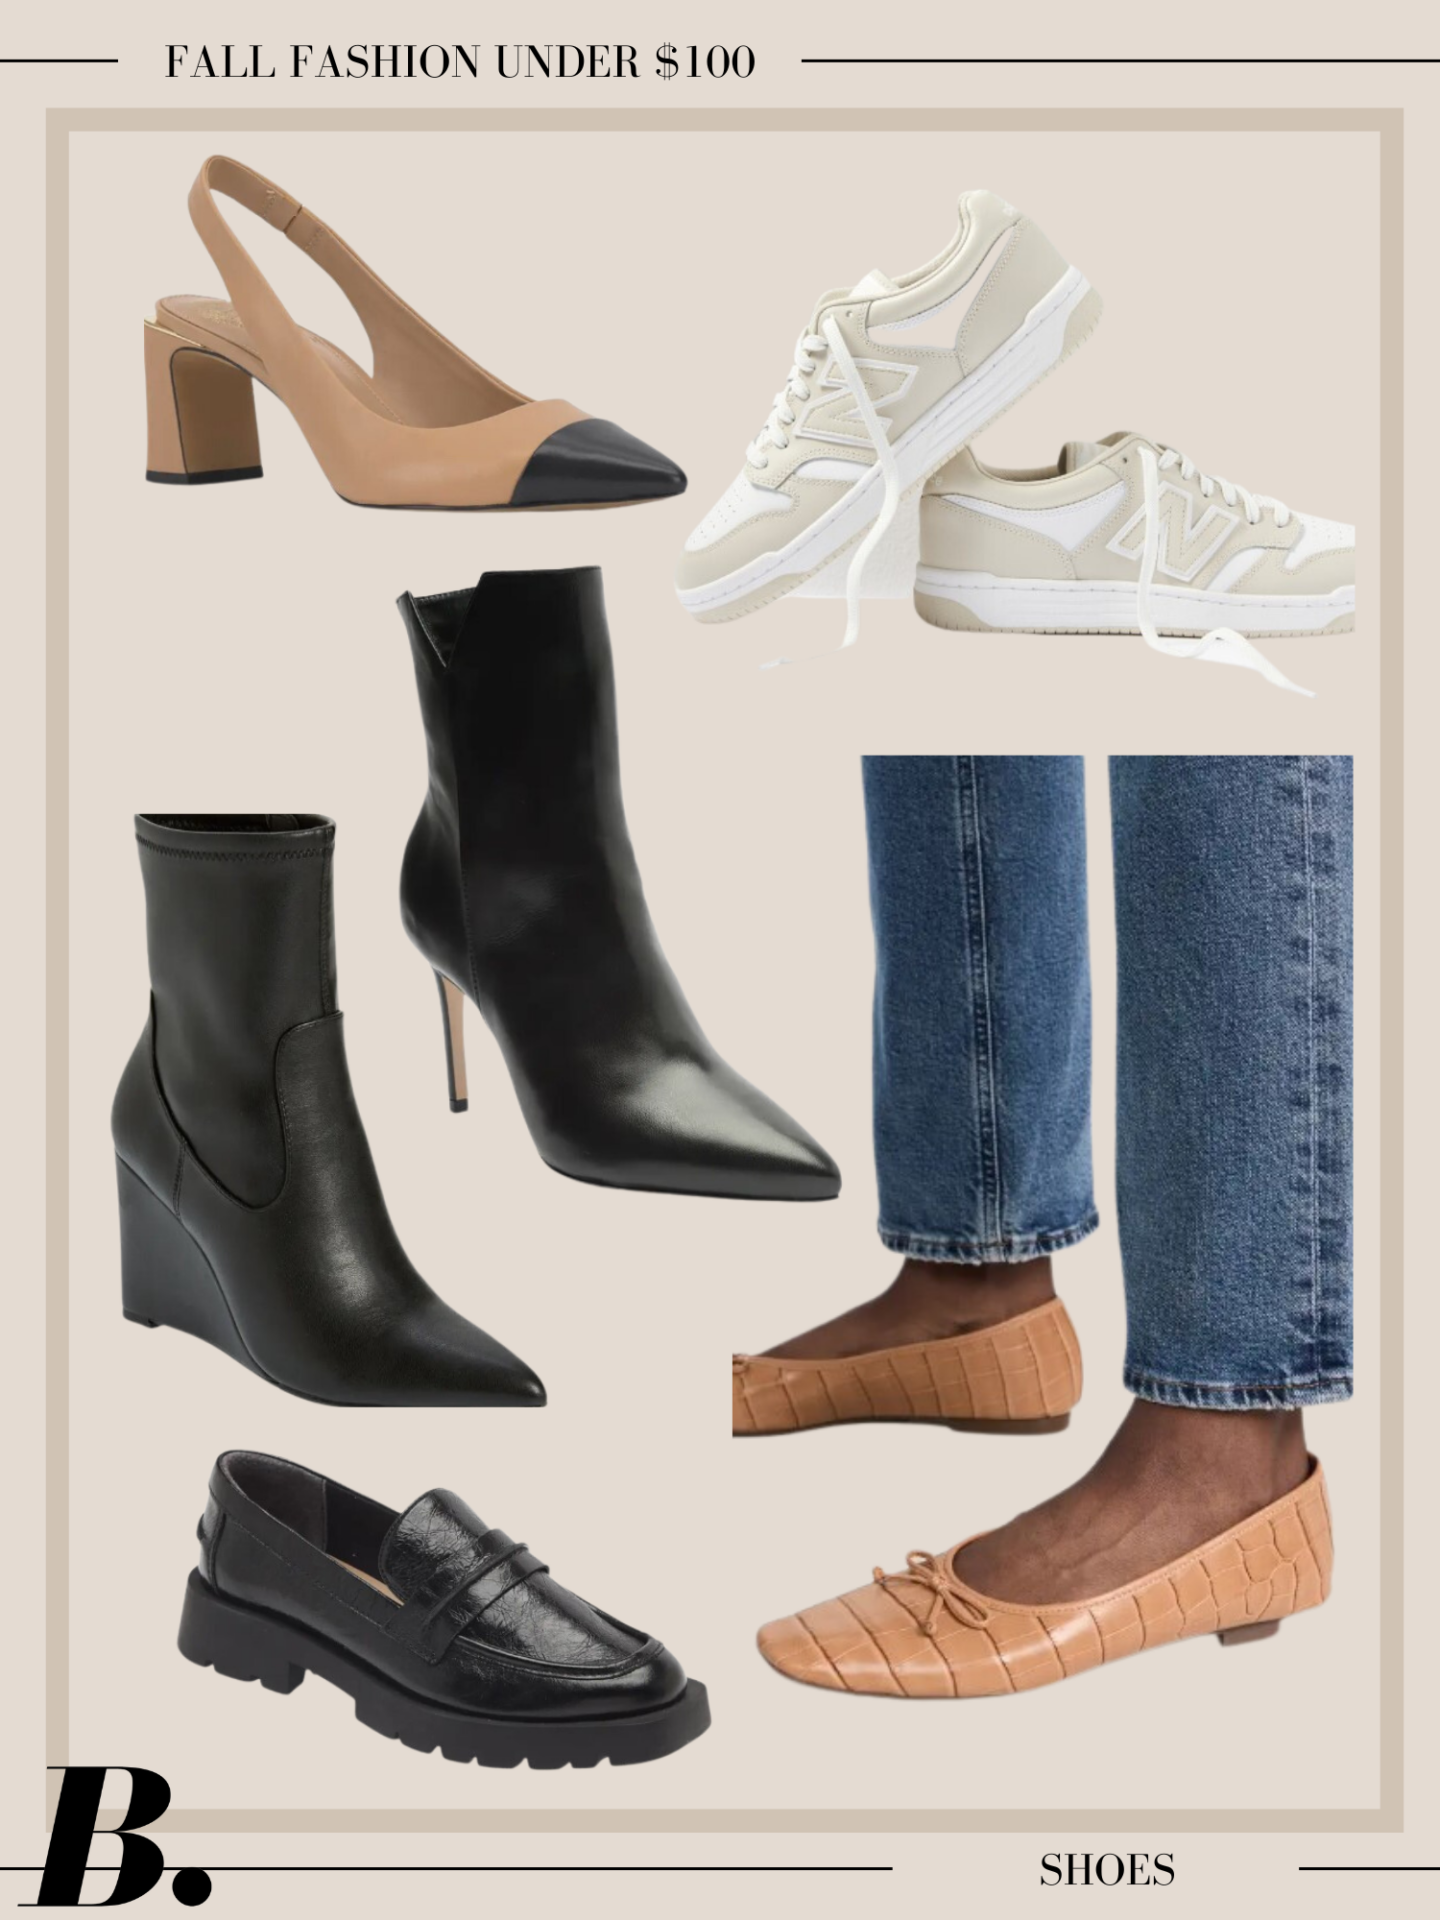 Fall Shoe Fashion Under $100